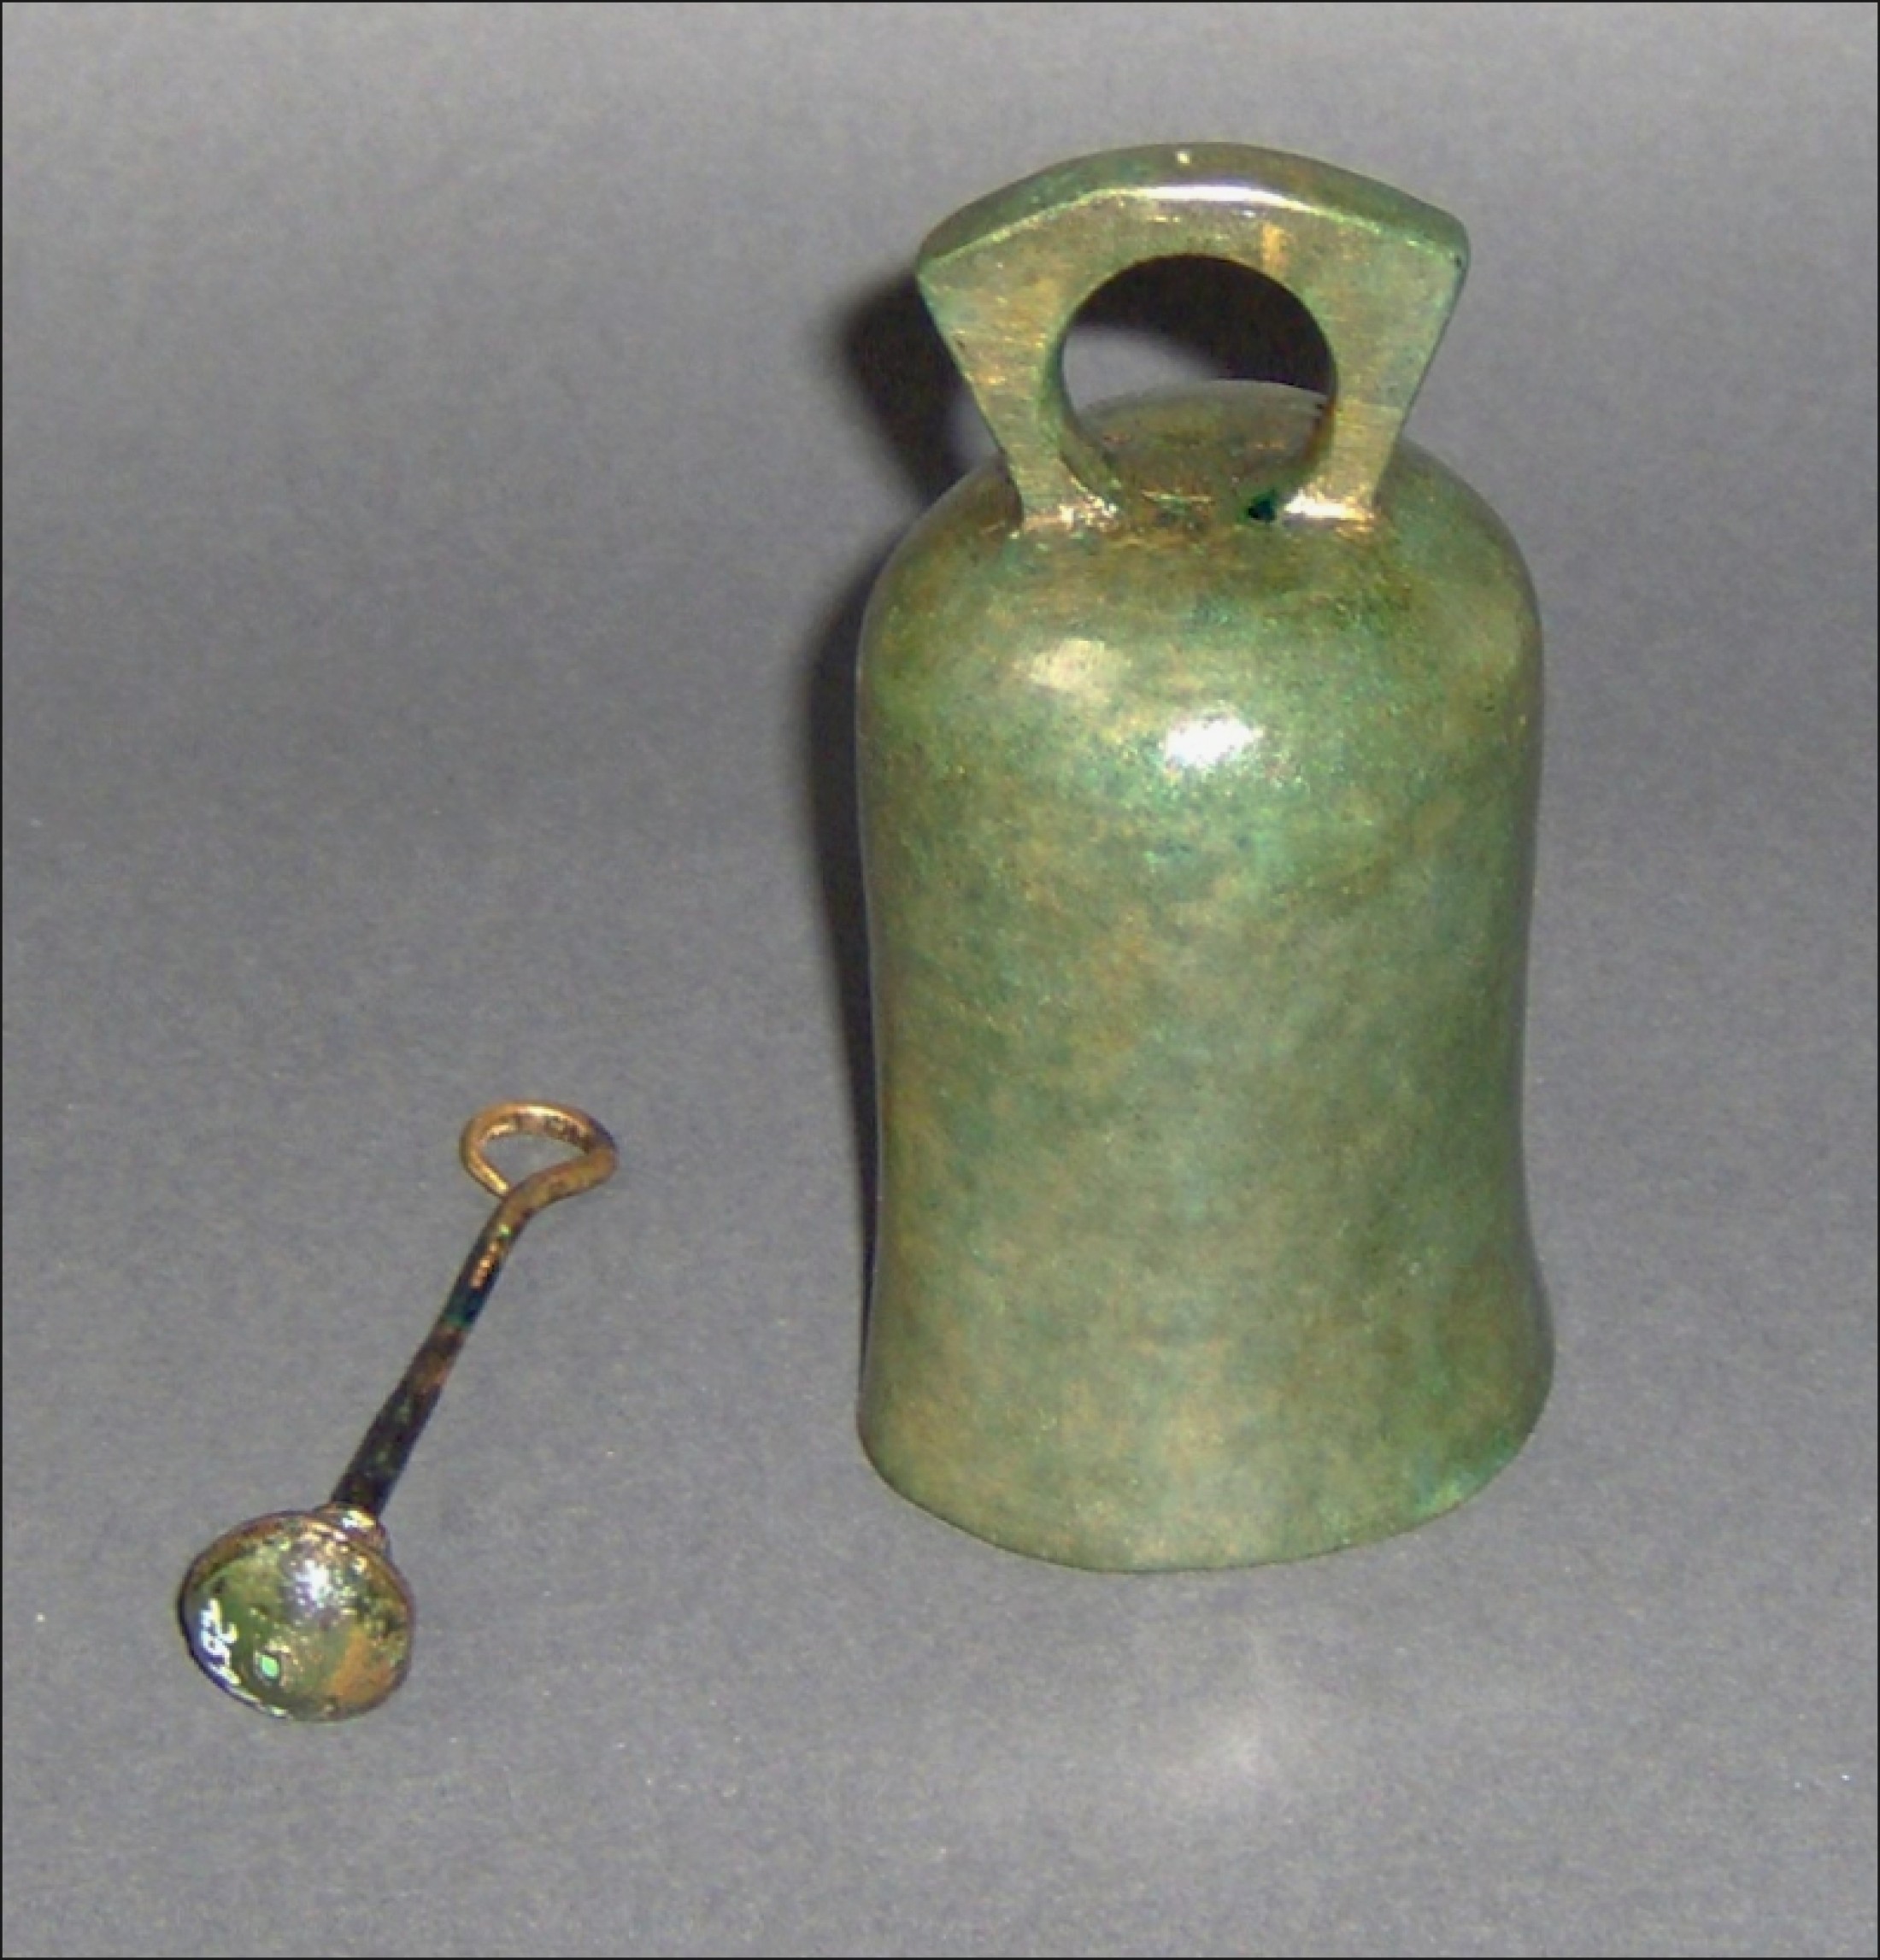 : Roman bronze bell, Hallstatt period cemetery Hallstatt-Hochtal, discovered in grave 765